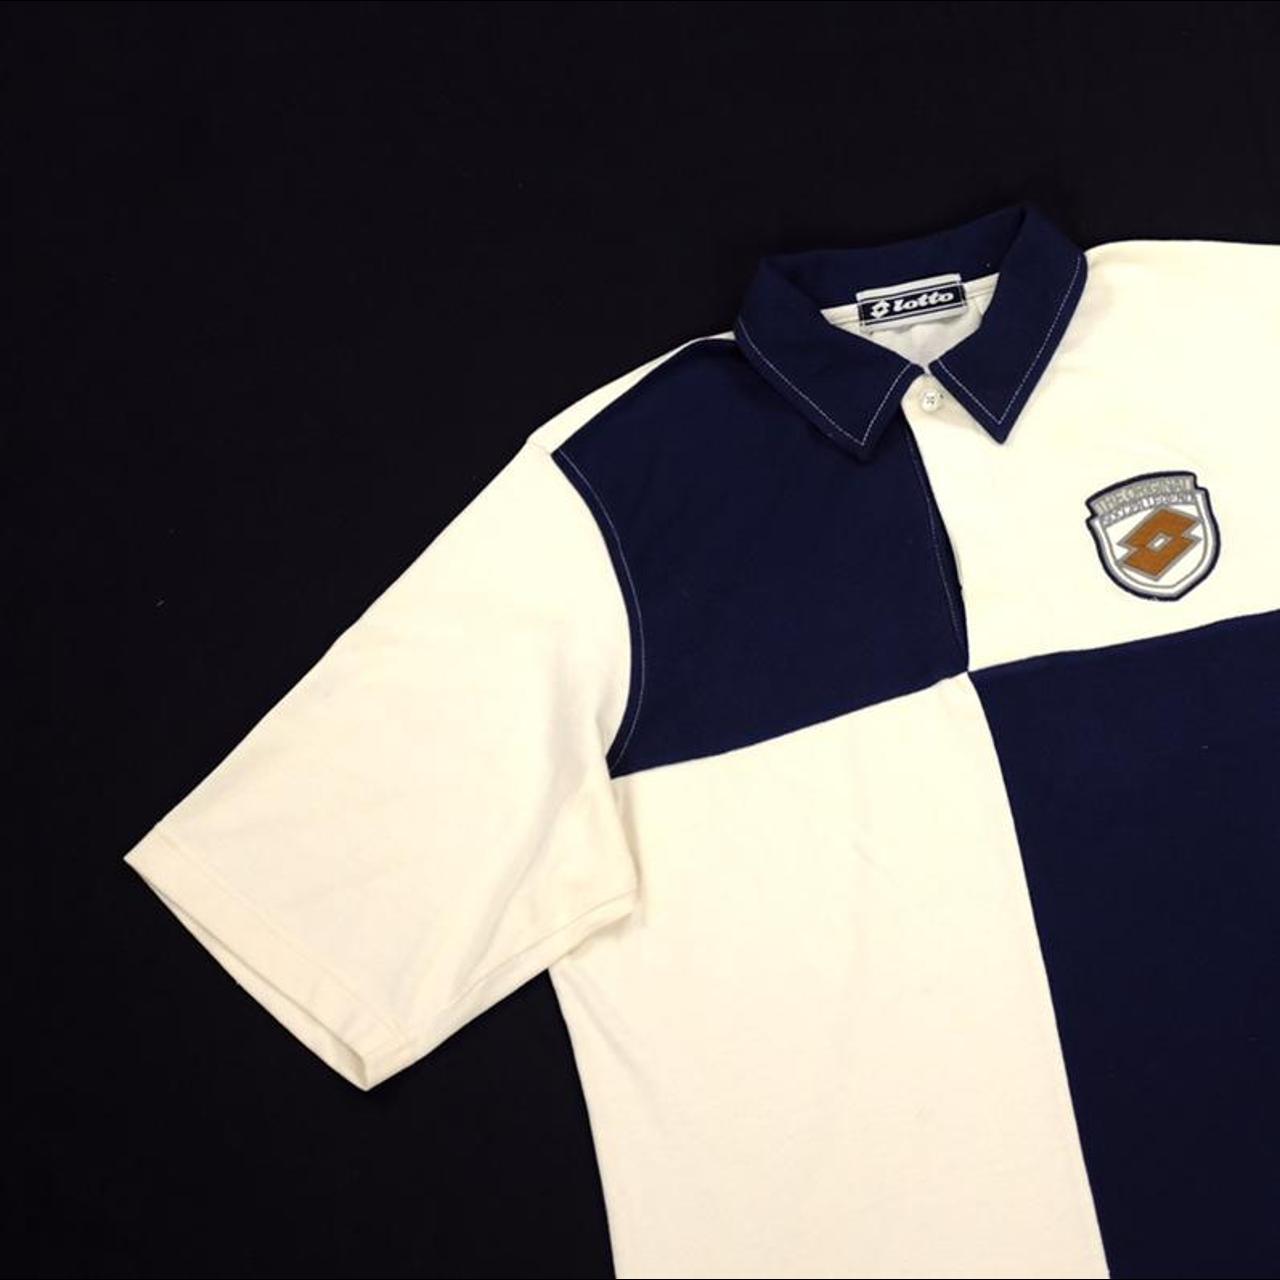 Vintage Lotto polo shirt. Original 90s Lotto Soccer... - Depop